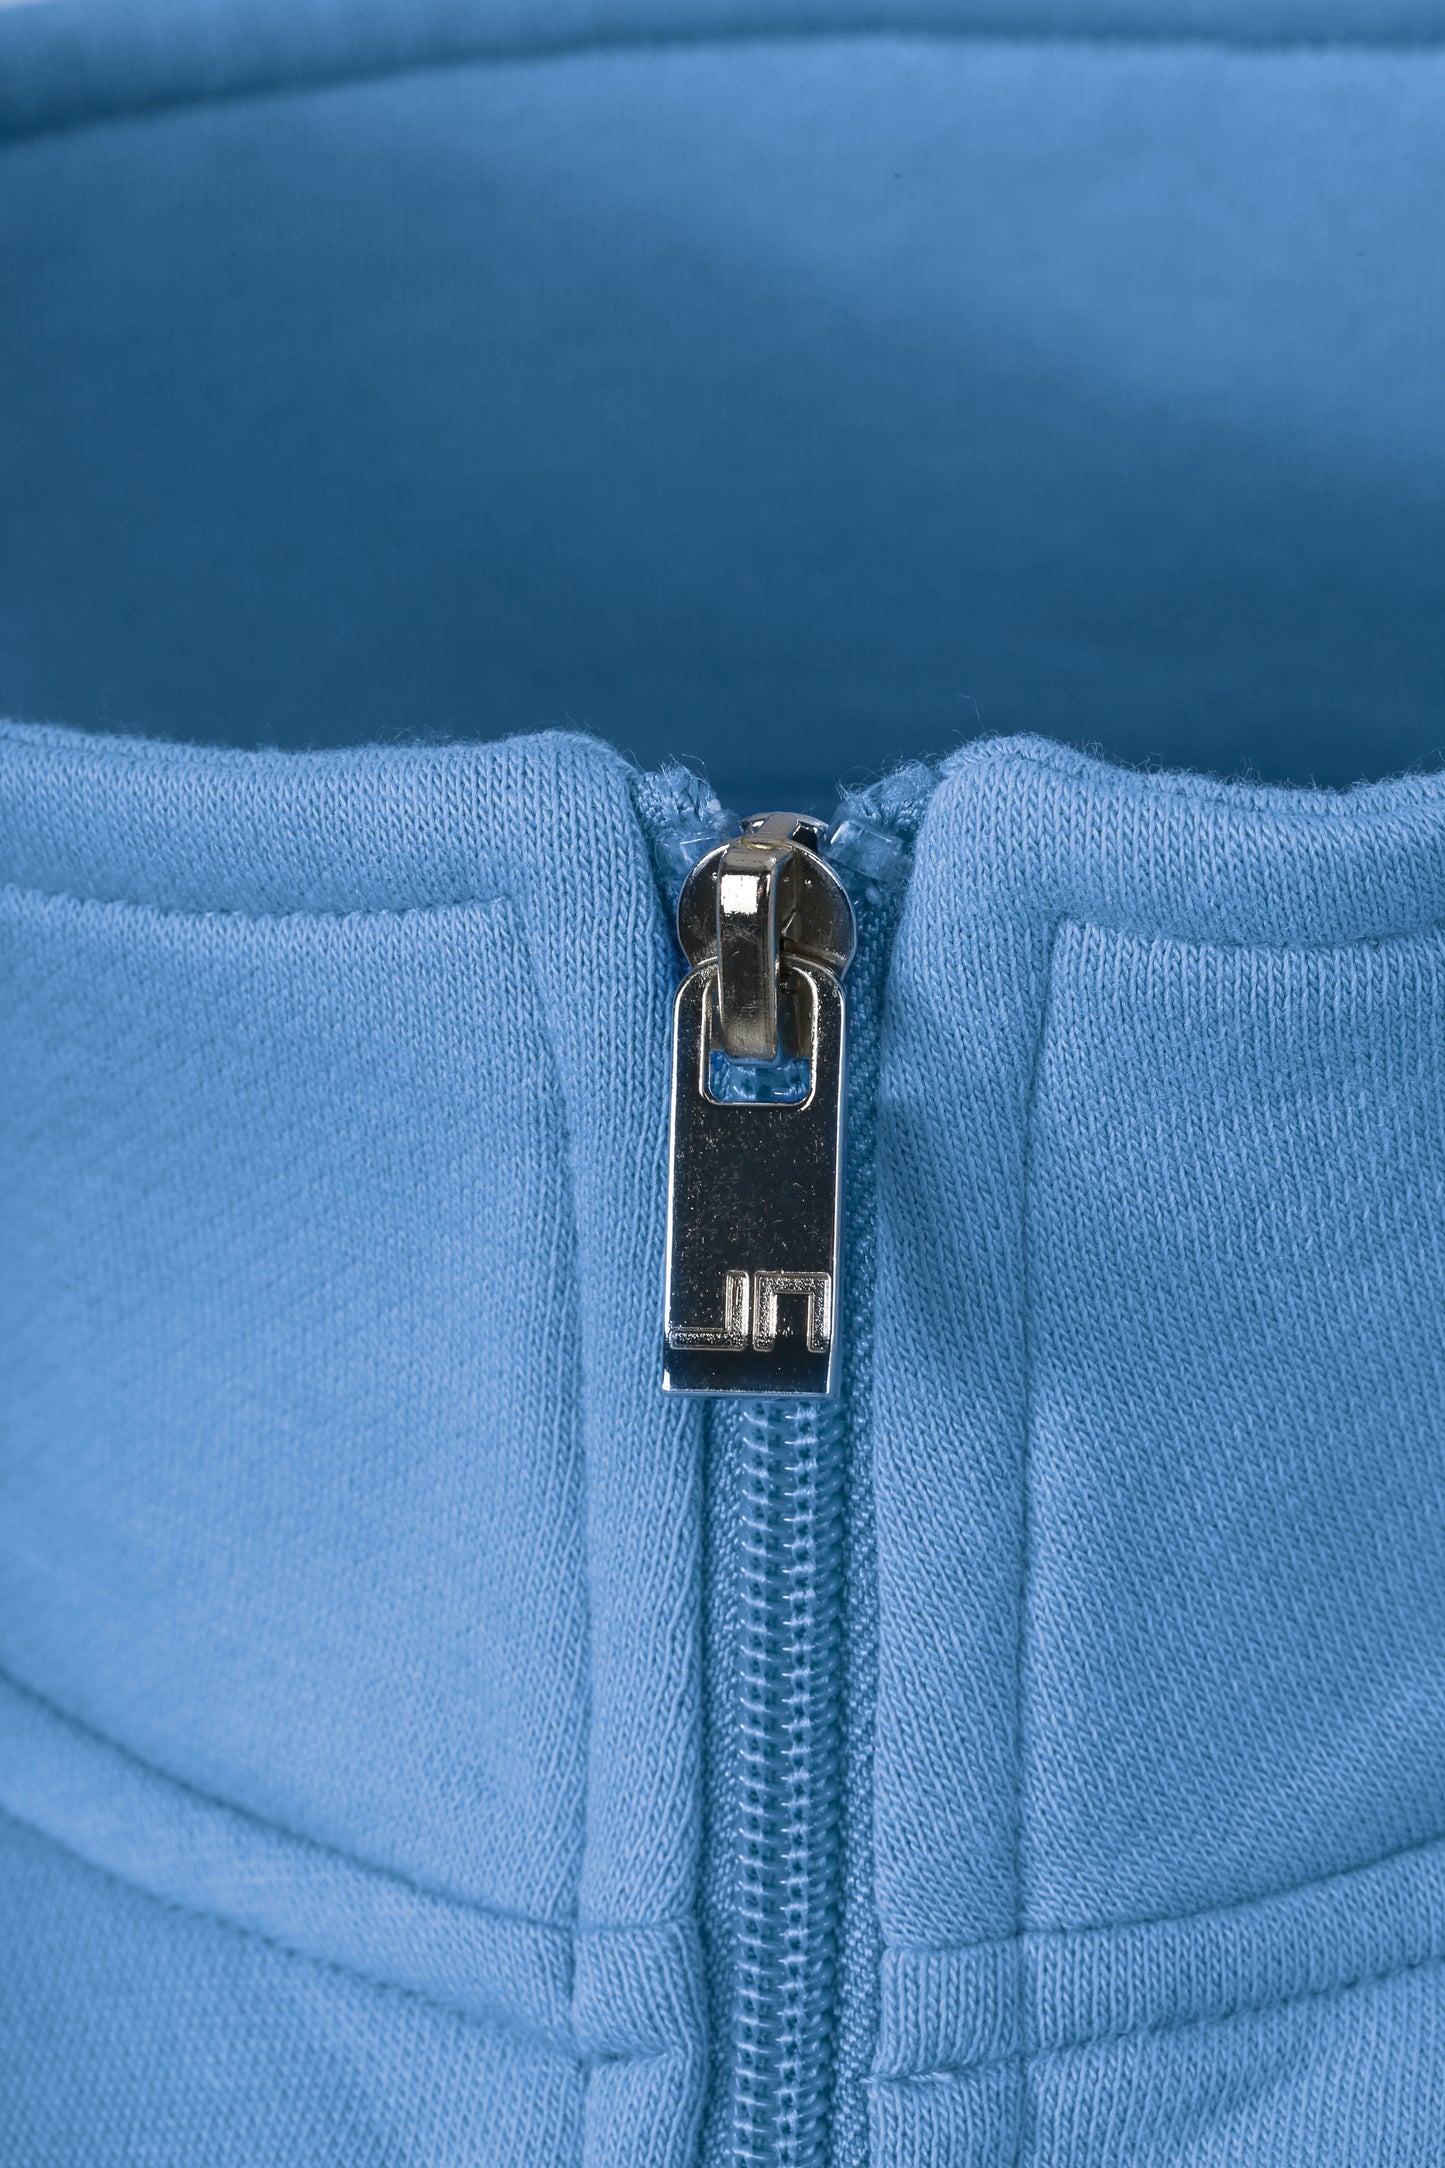 Personalisierbares Unisex Half Zip Sweatshirt - Weitere Farben